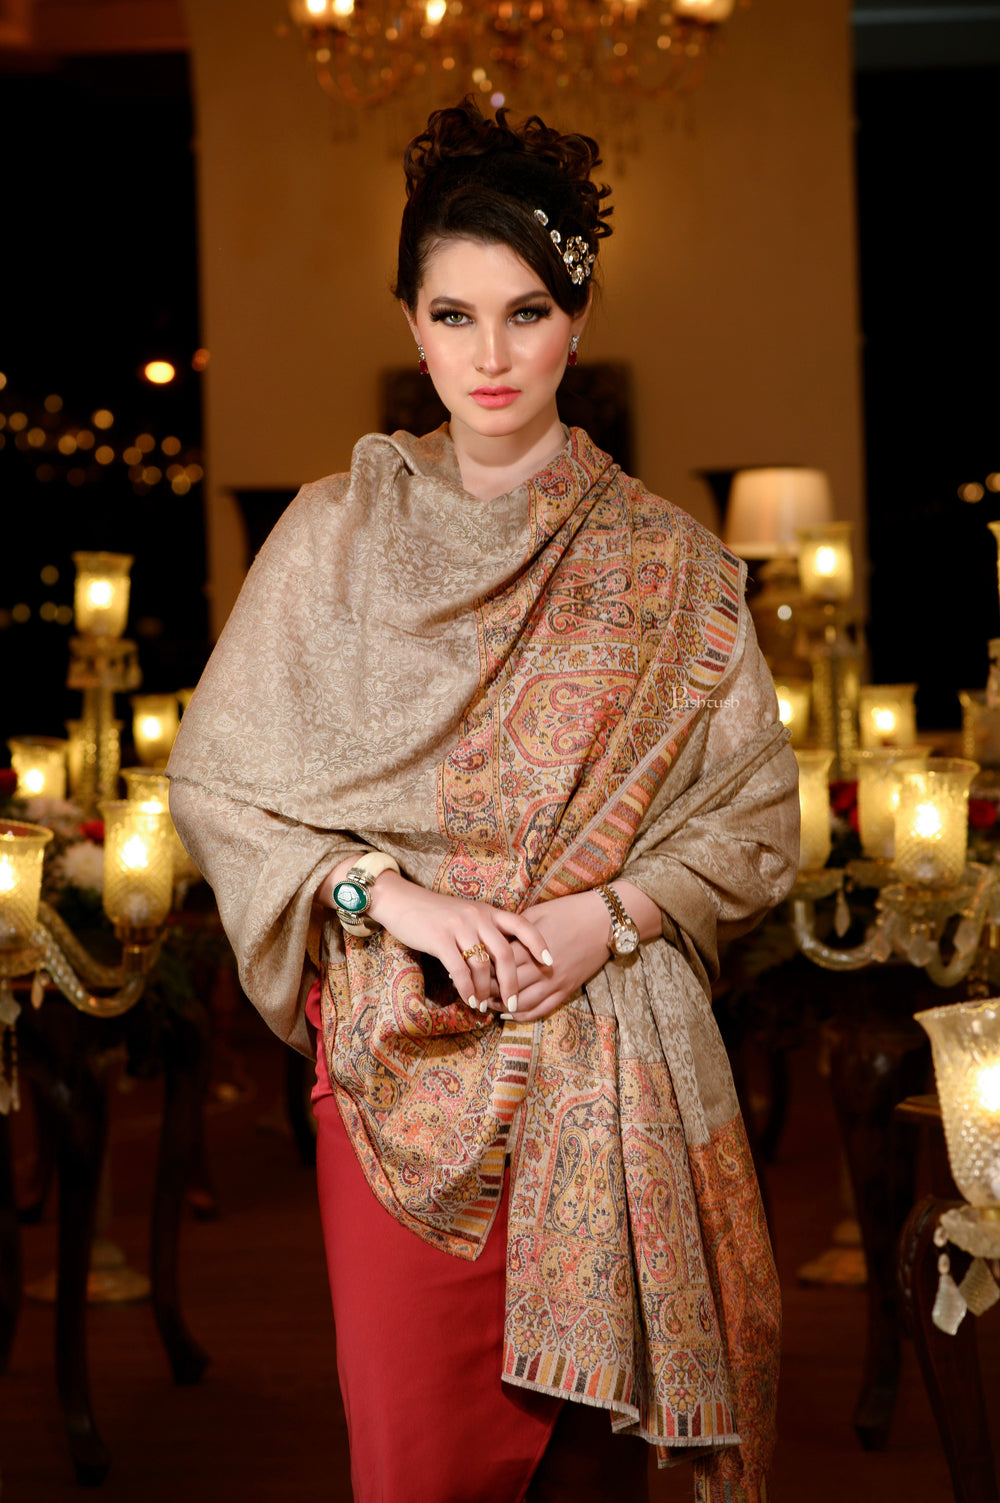 Pashtush India Womens Shawls Pashtush Womens Extra Fine Wool Shawl, Paisley Weave Design, Taupe